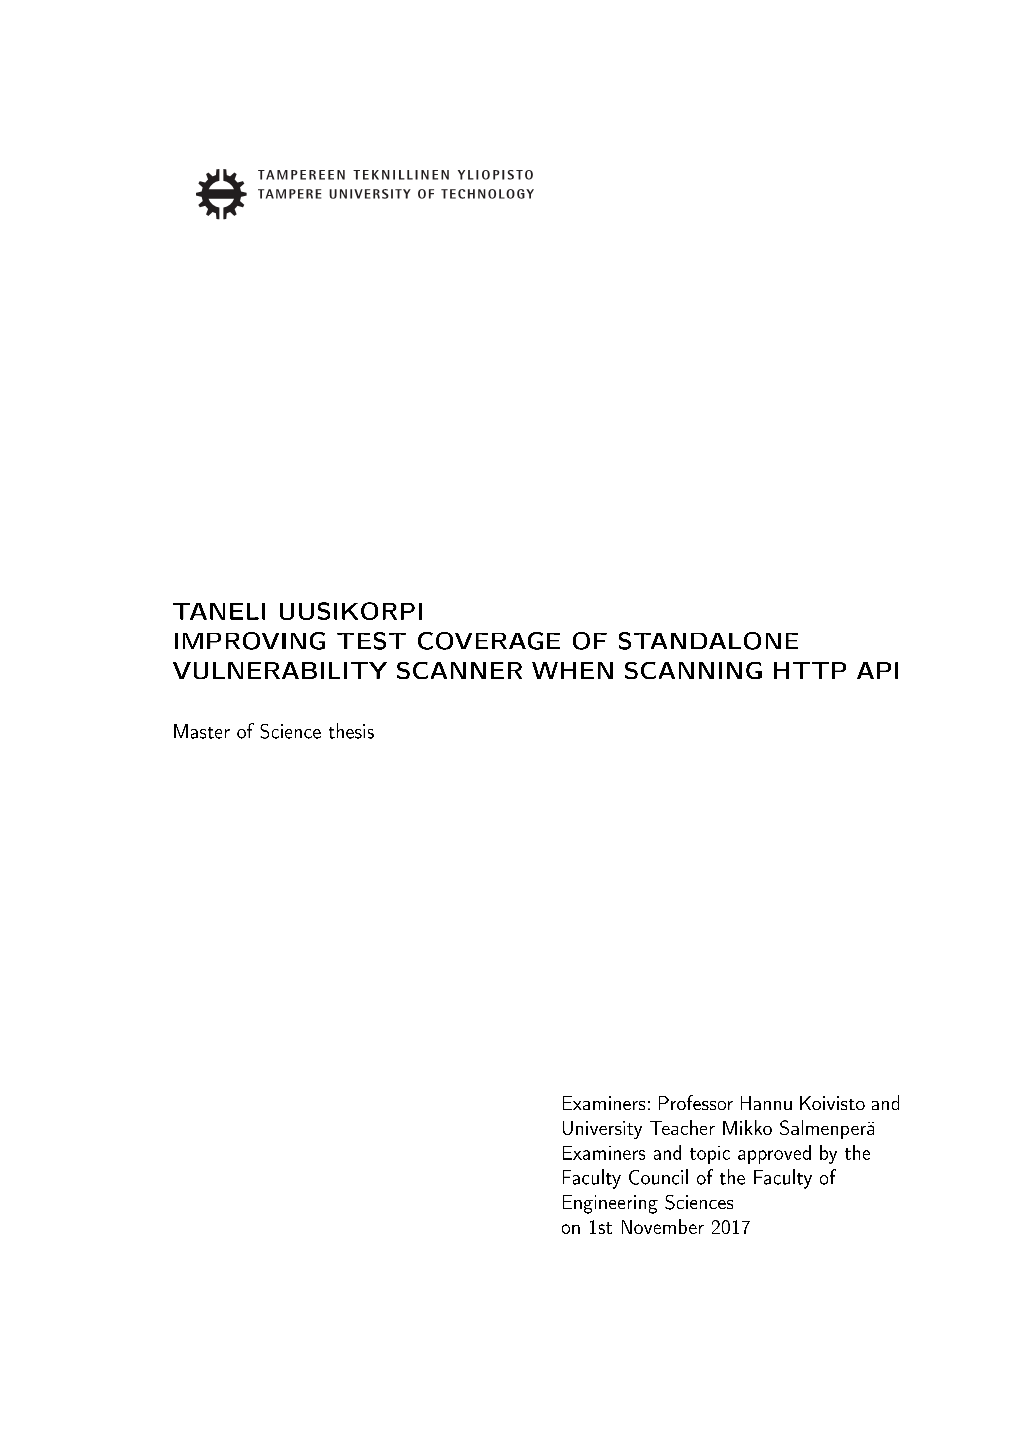 Taneli Uusikorpi Improving Test Coverage of Standalone Vulnerability Scanner When Scanning Http Api